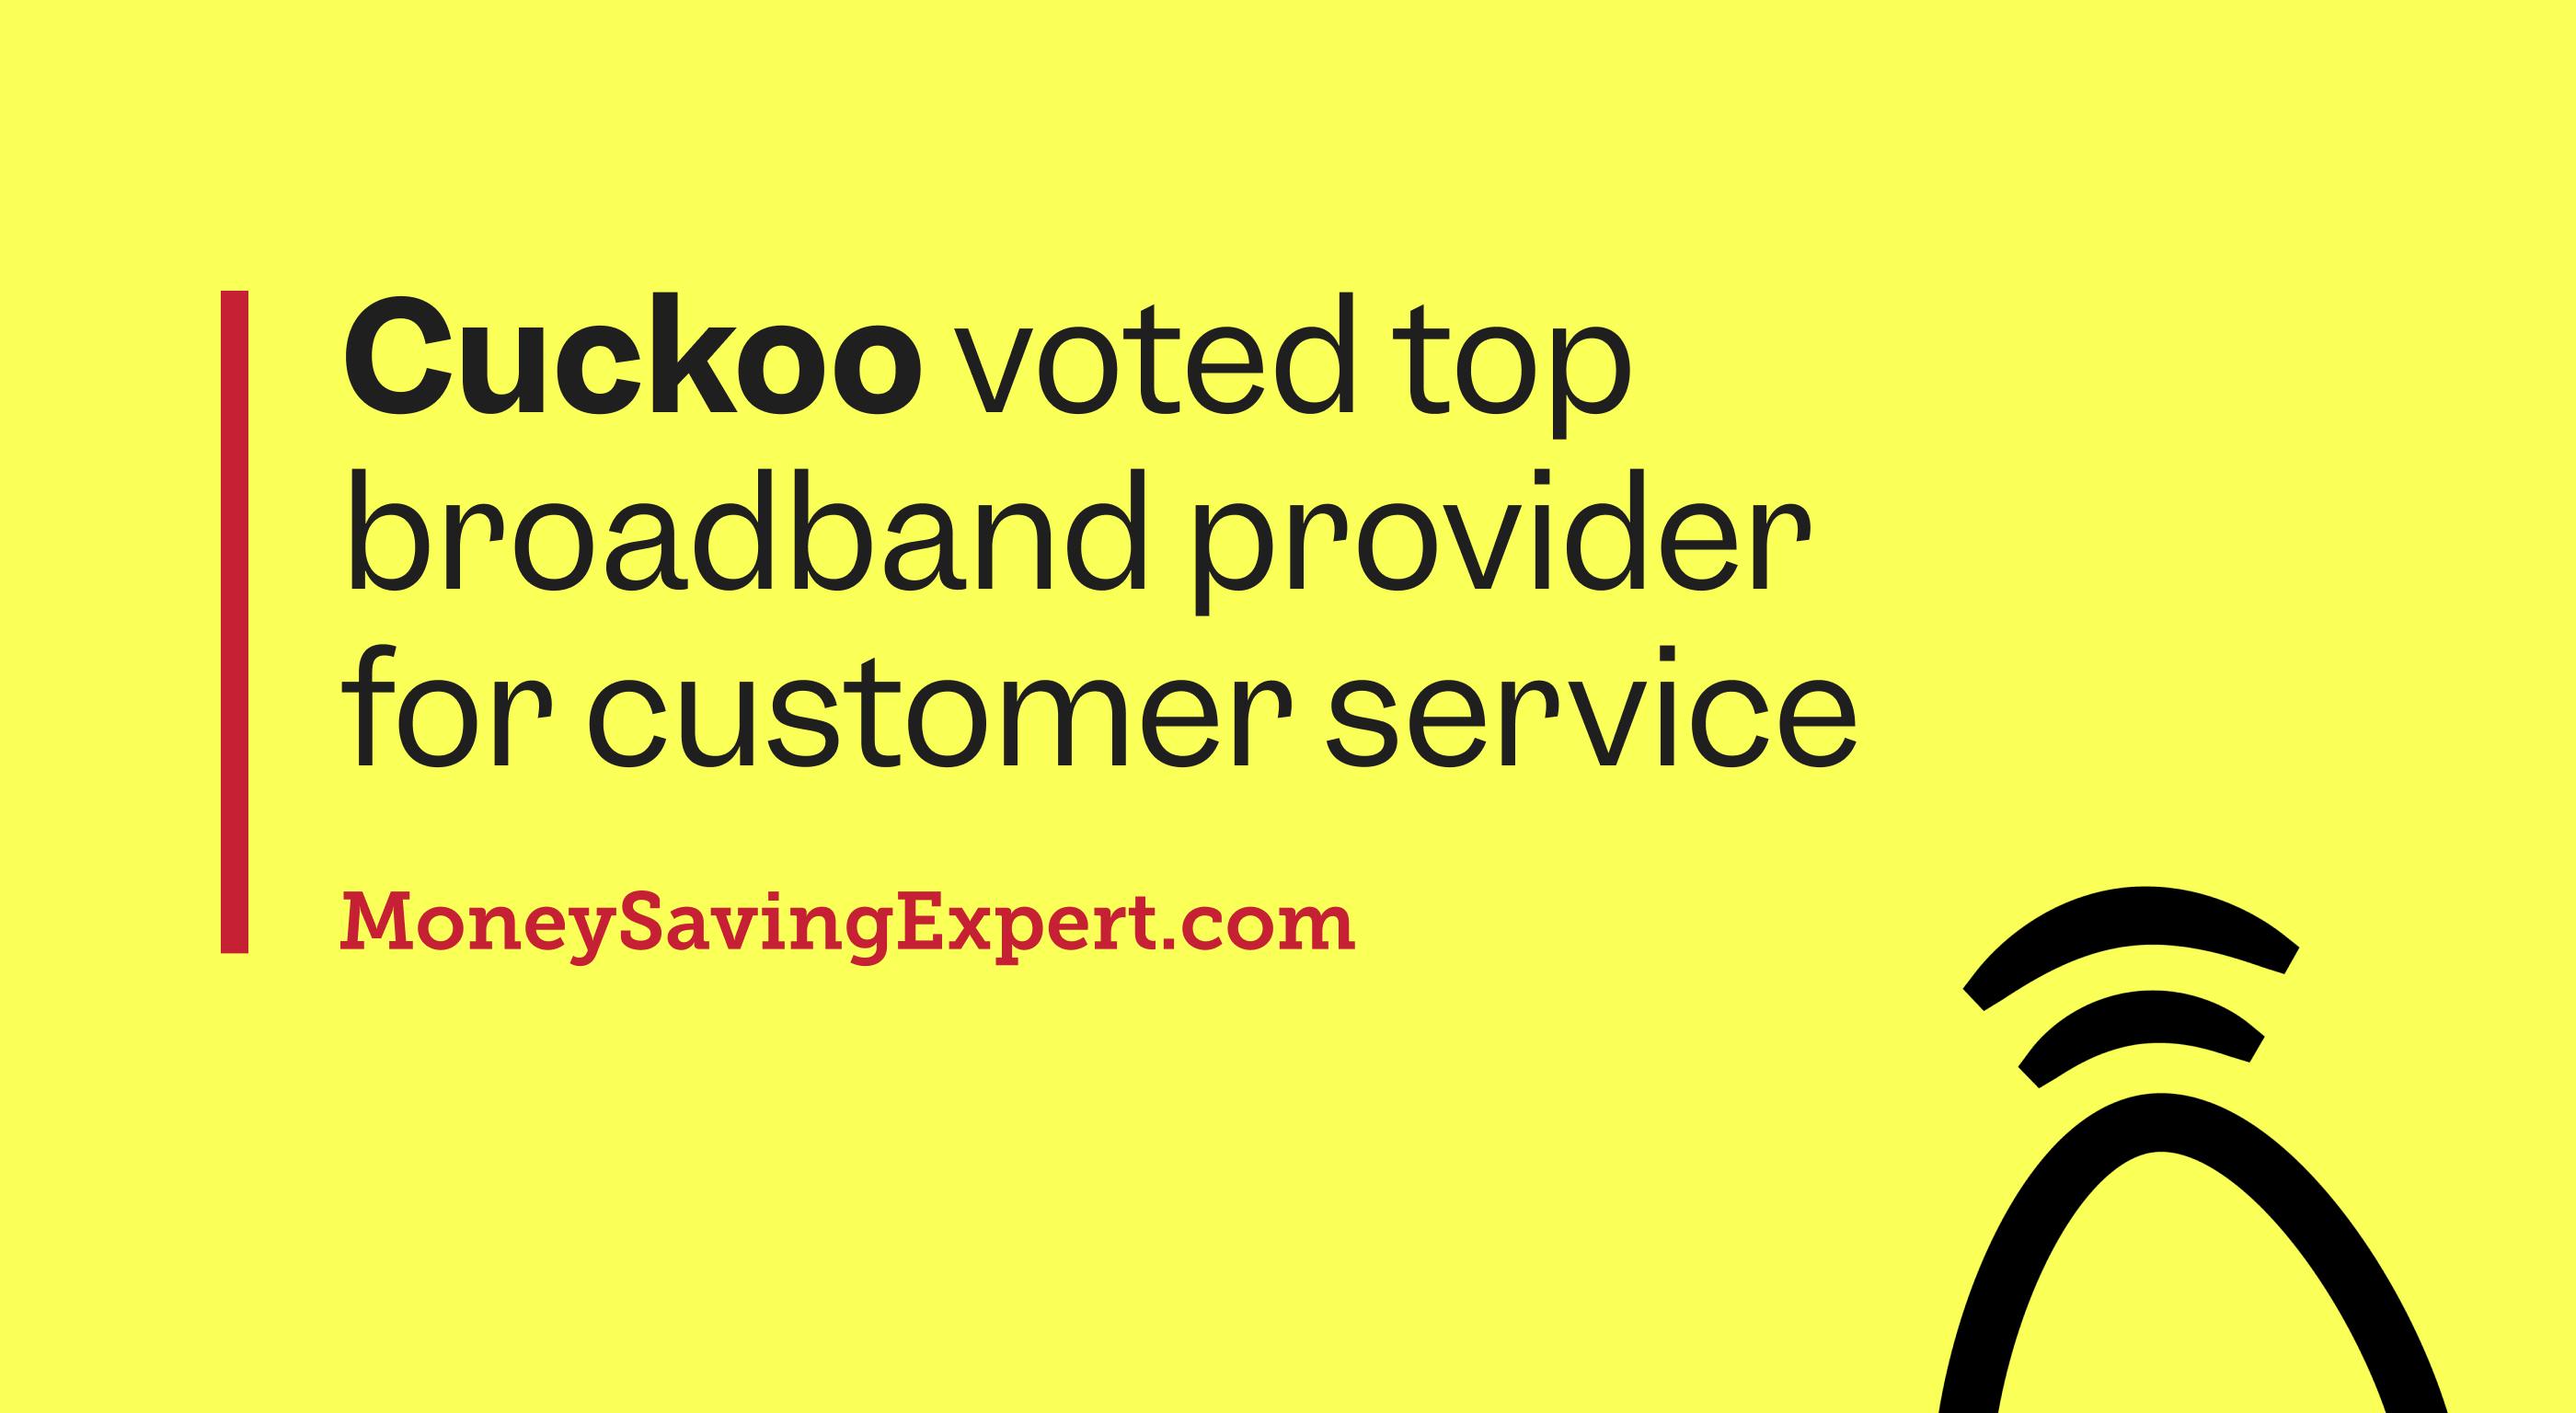 Cuckoo voted top broadband provider for customer service